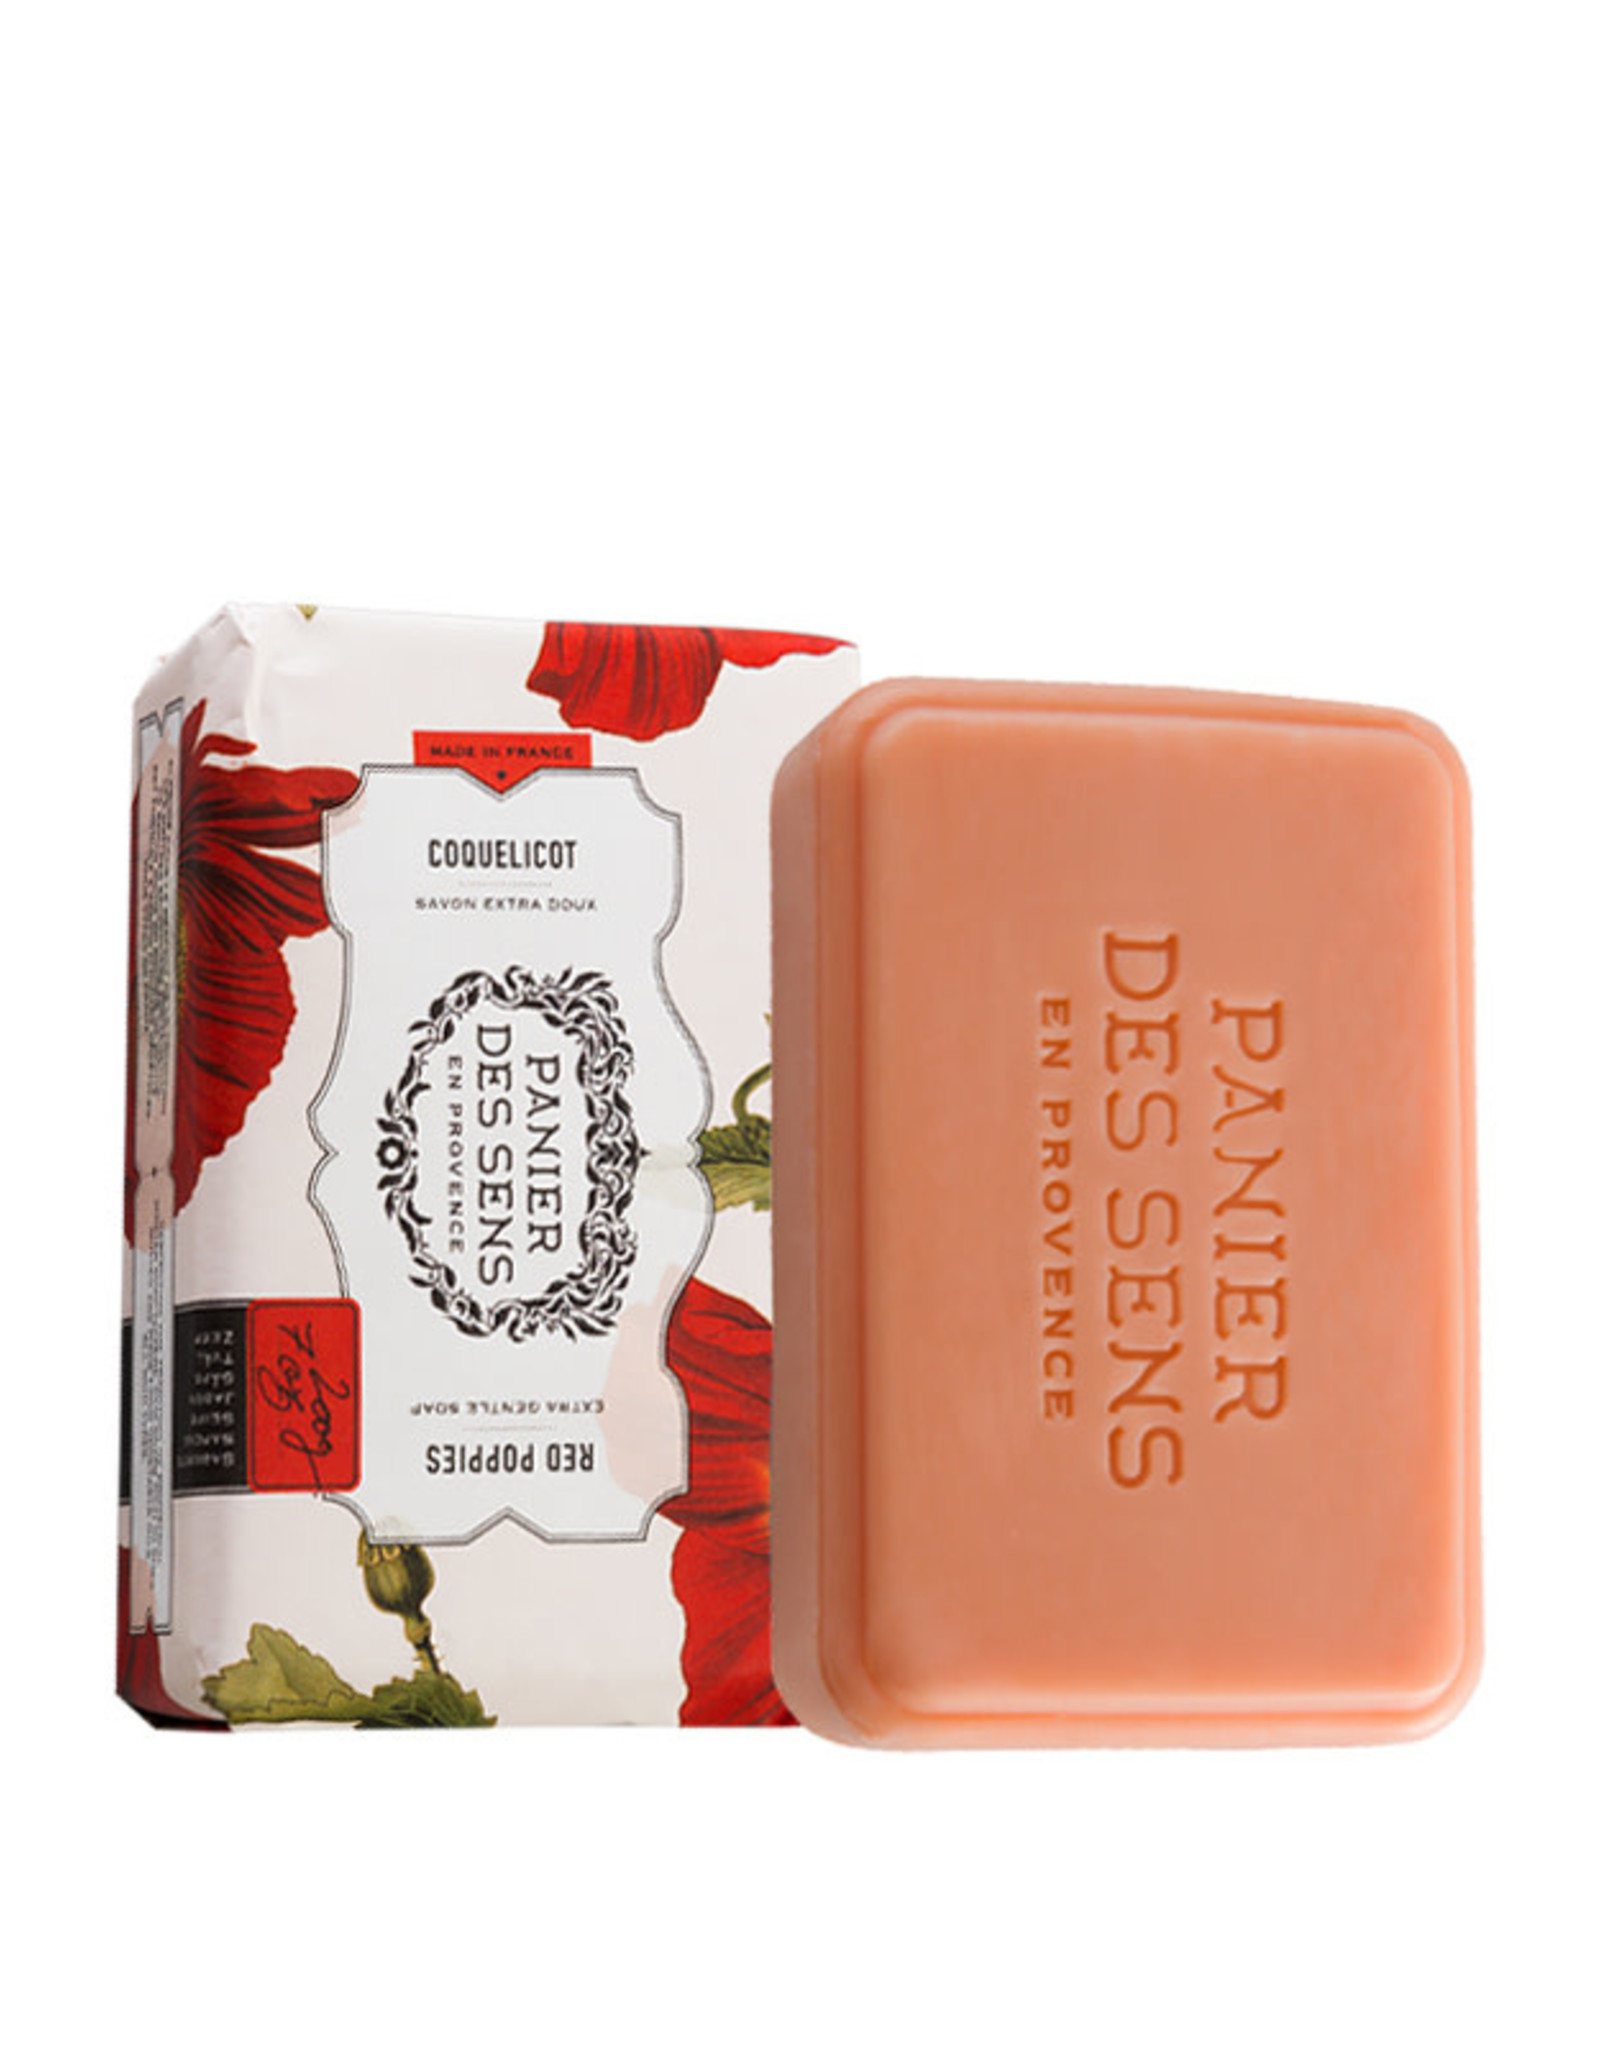 Panier Des Sens Shea Butter Soap Bar Red Poppies  7 oz. - Panier Des Sens